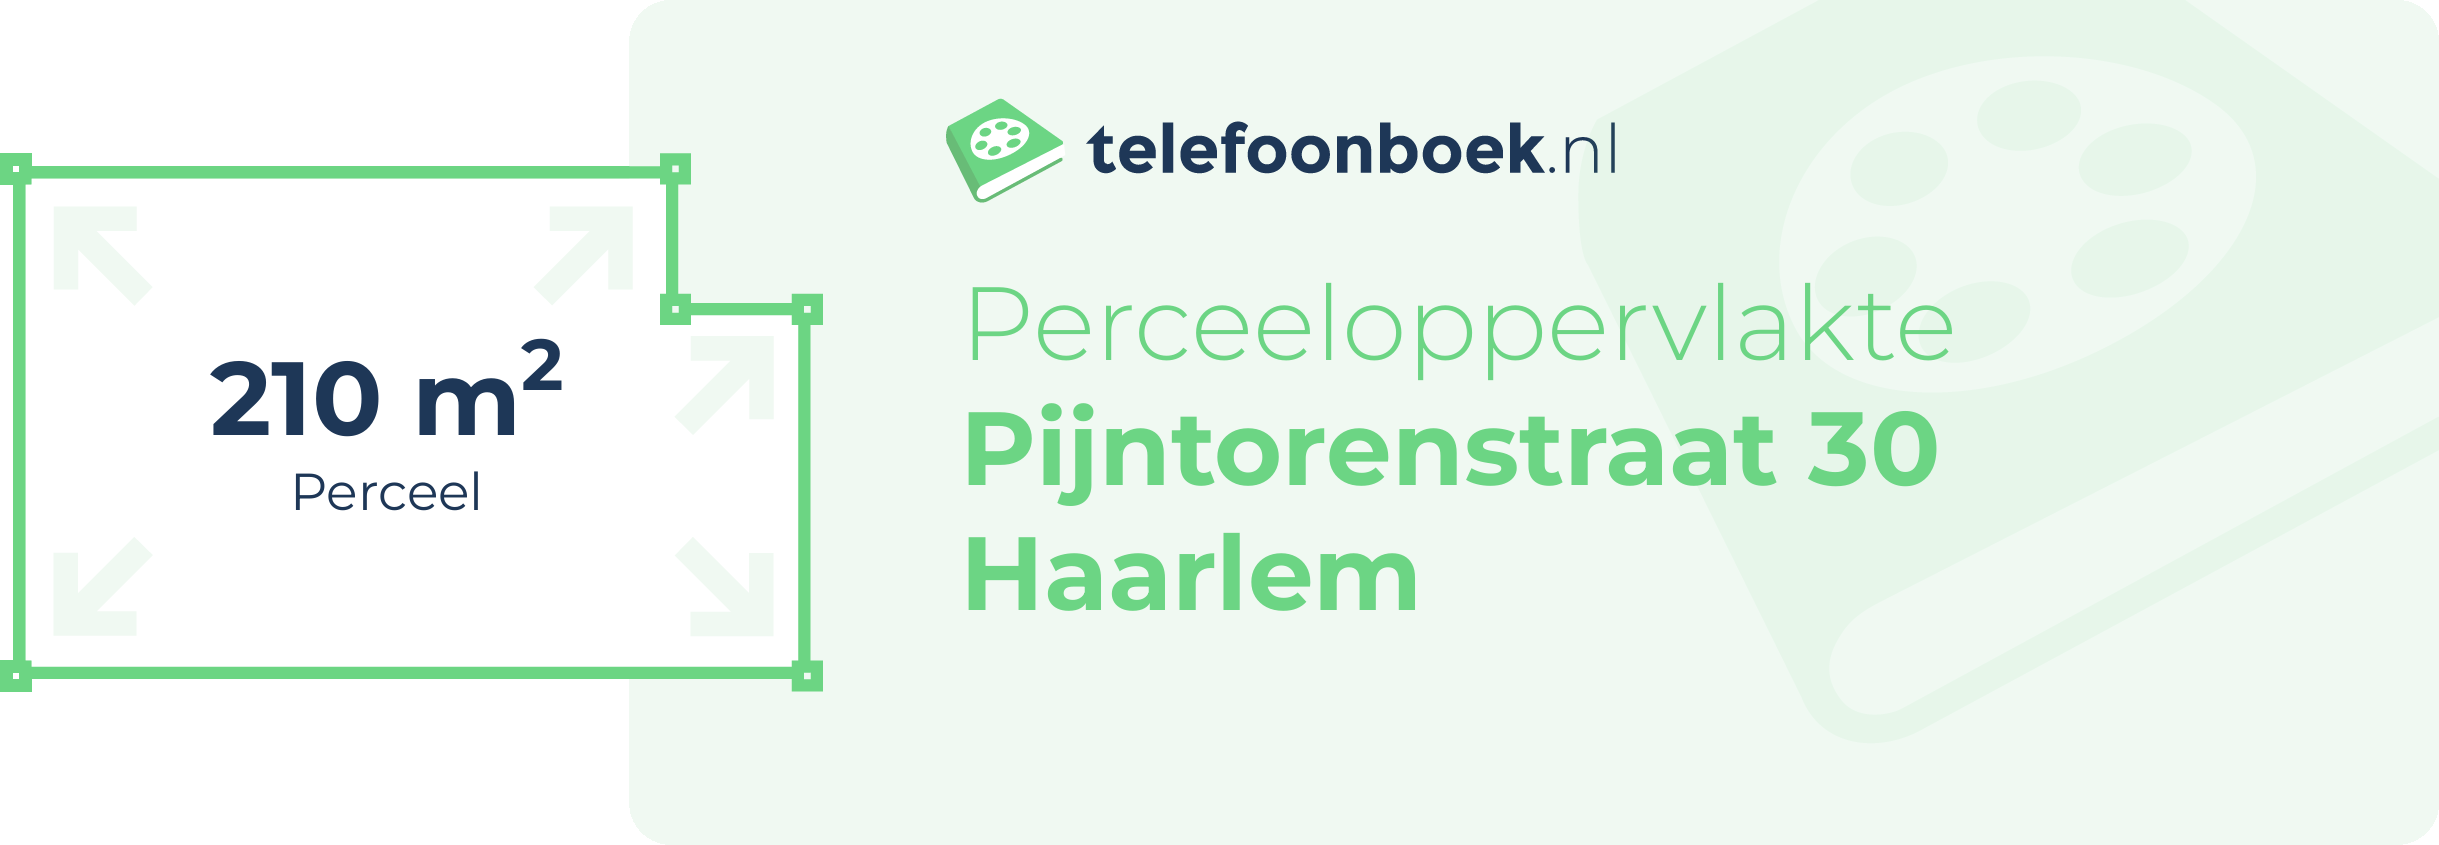 Perceeloppervlakte Pijntorenstraat 30 Haarlem